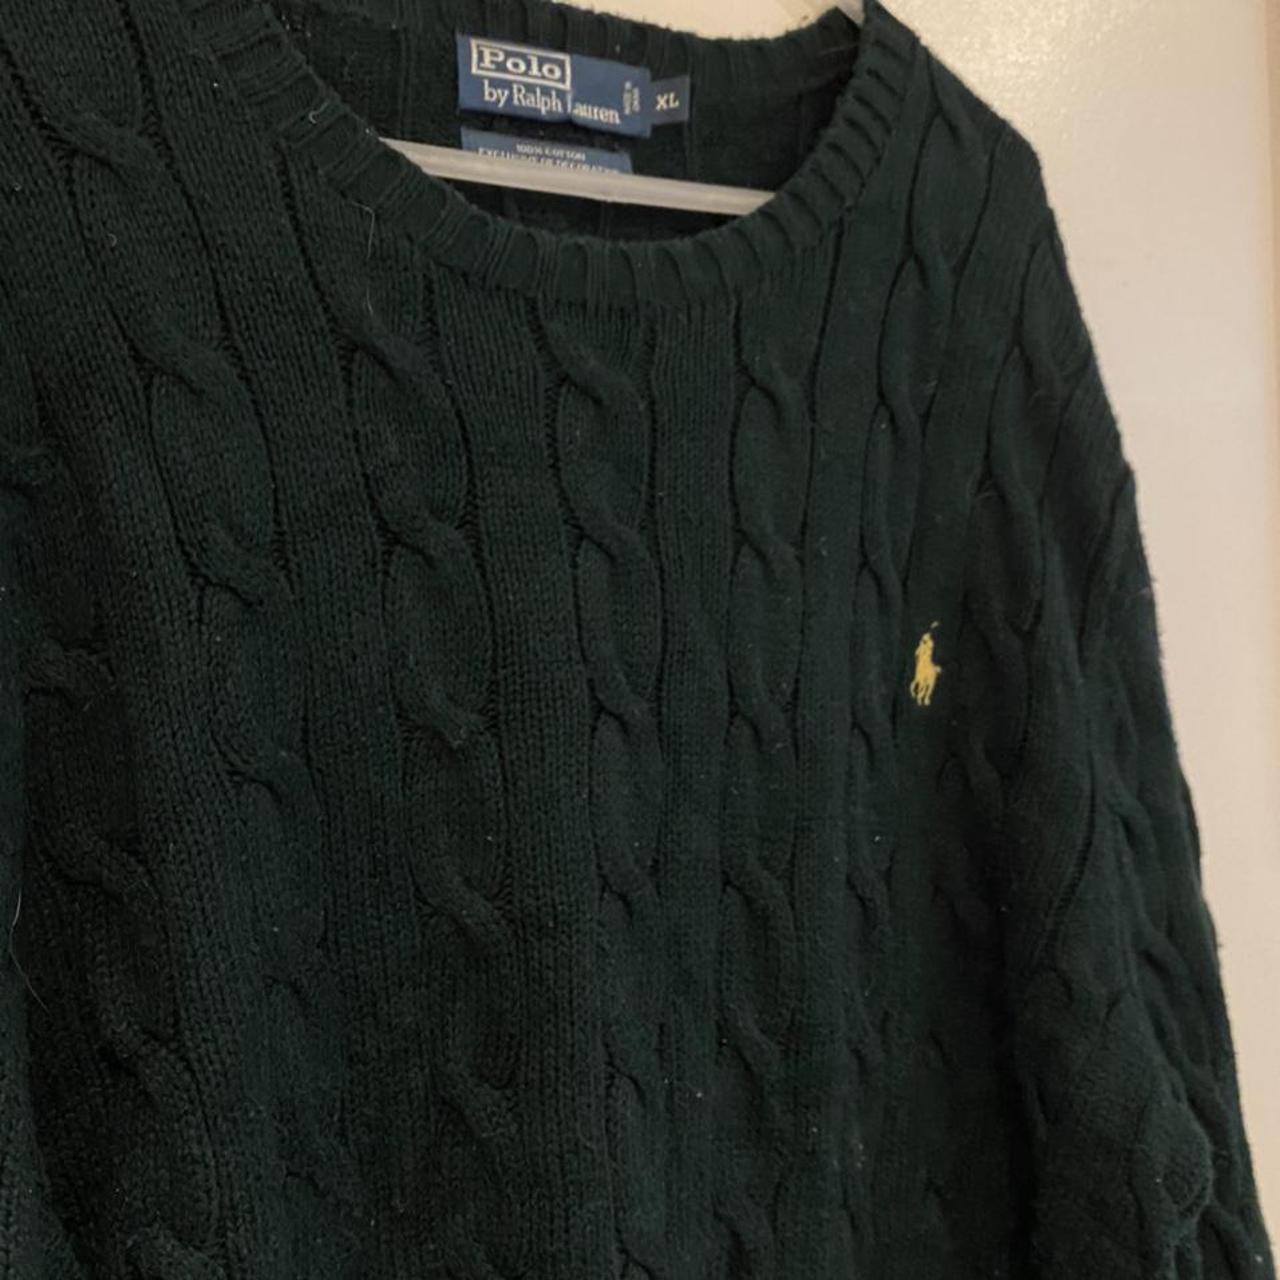 Dark Green Ralph Lauren heavy knitted jumper with... - Depop